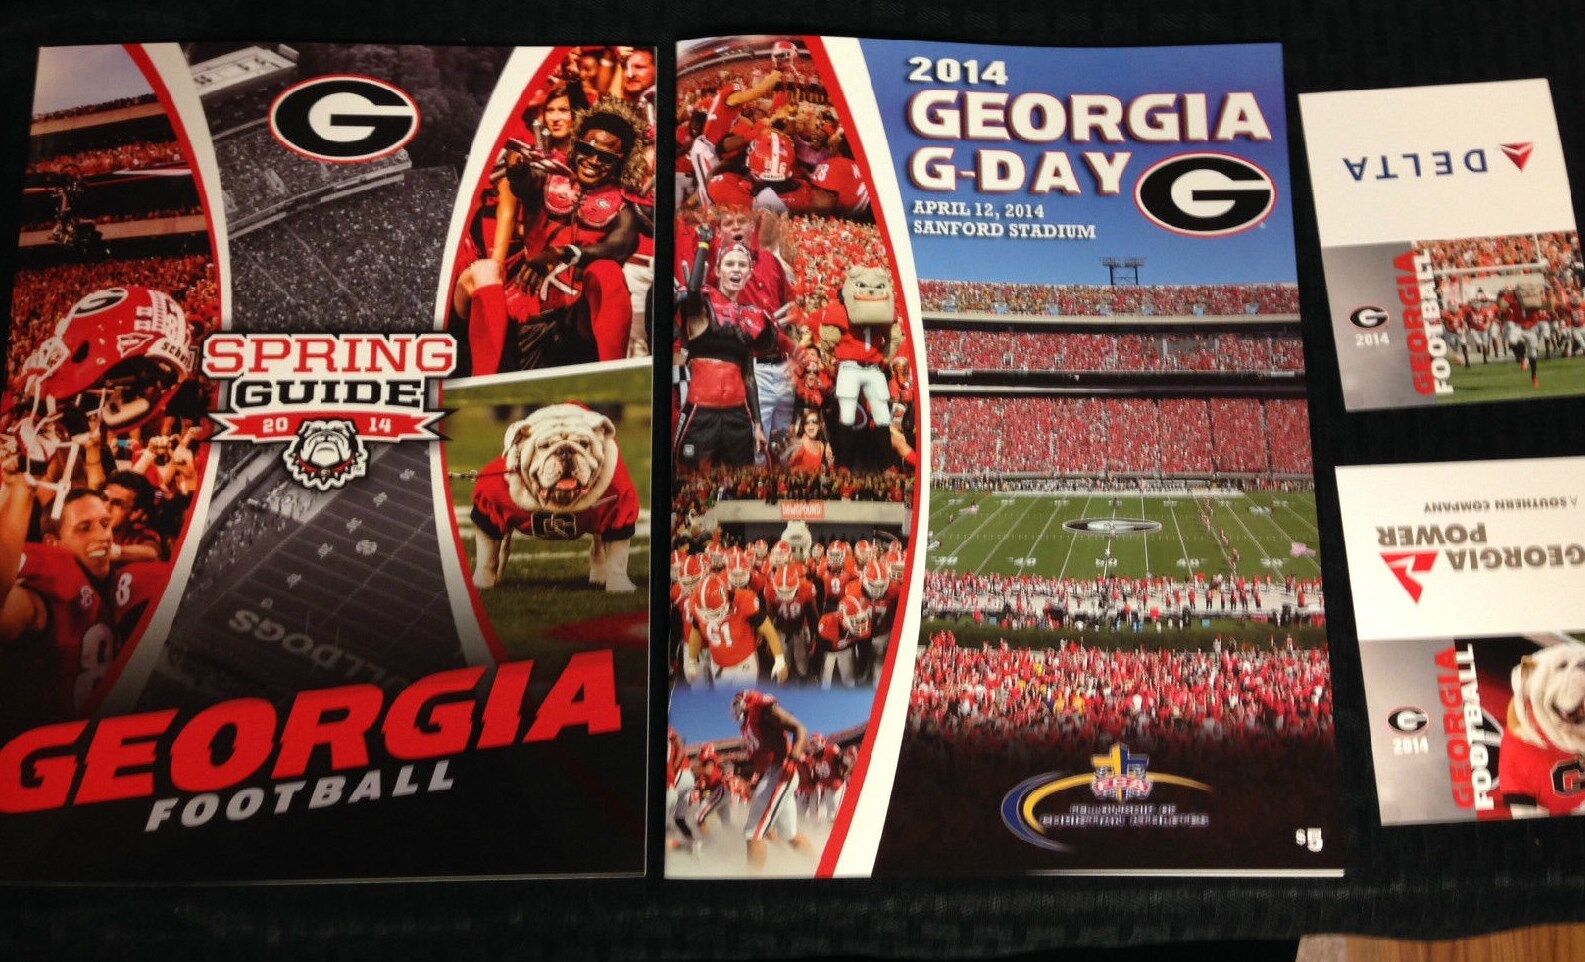 Georgia Bulldogs Football 2014 Spring Guide & \'14 G-Day Program UGA Todd Gurley 